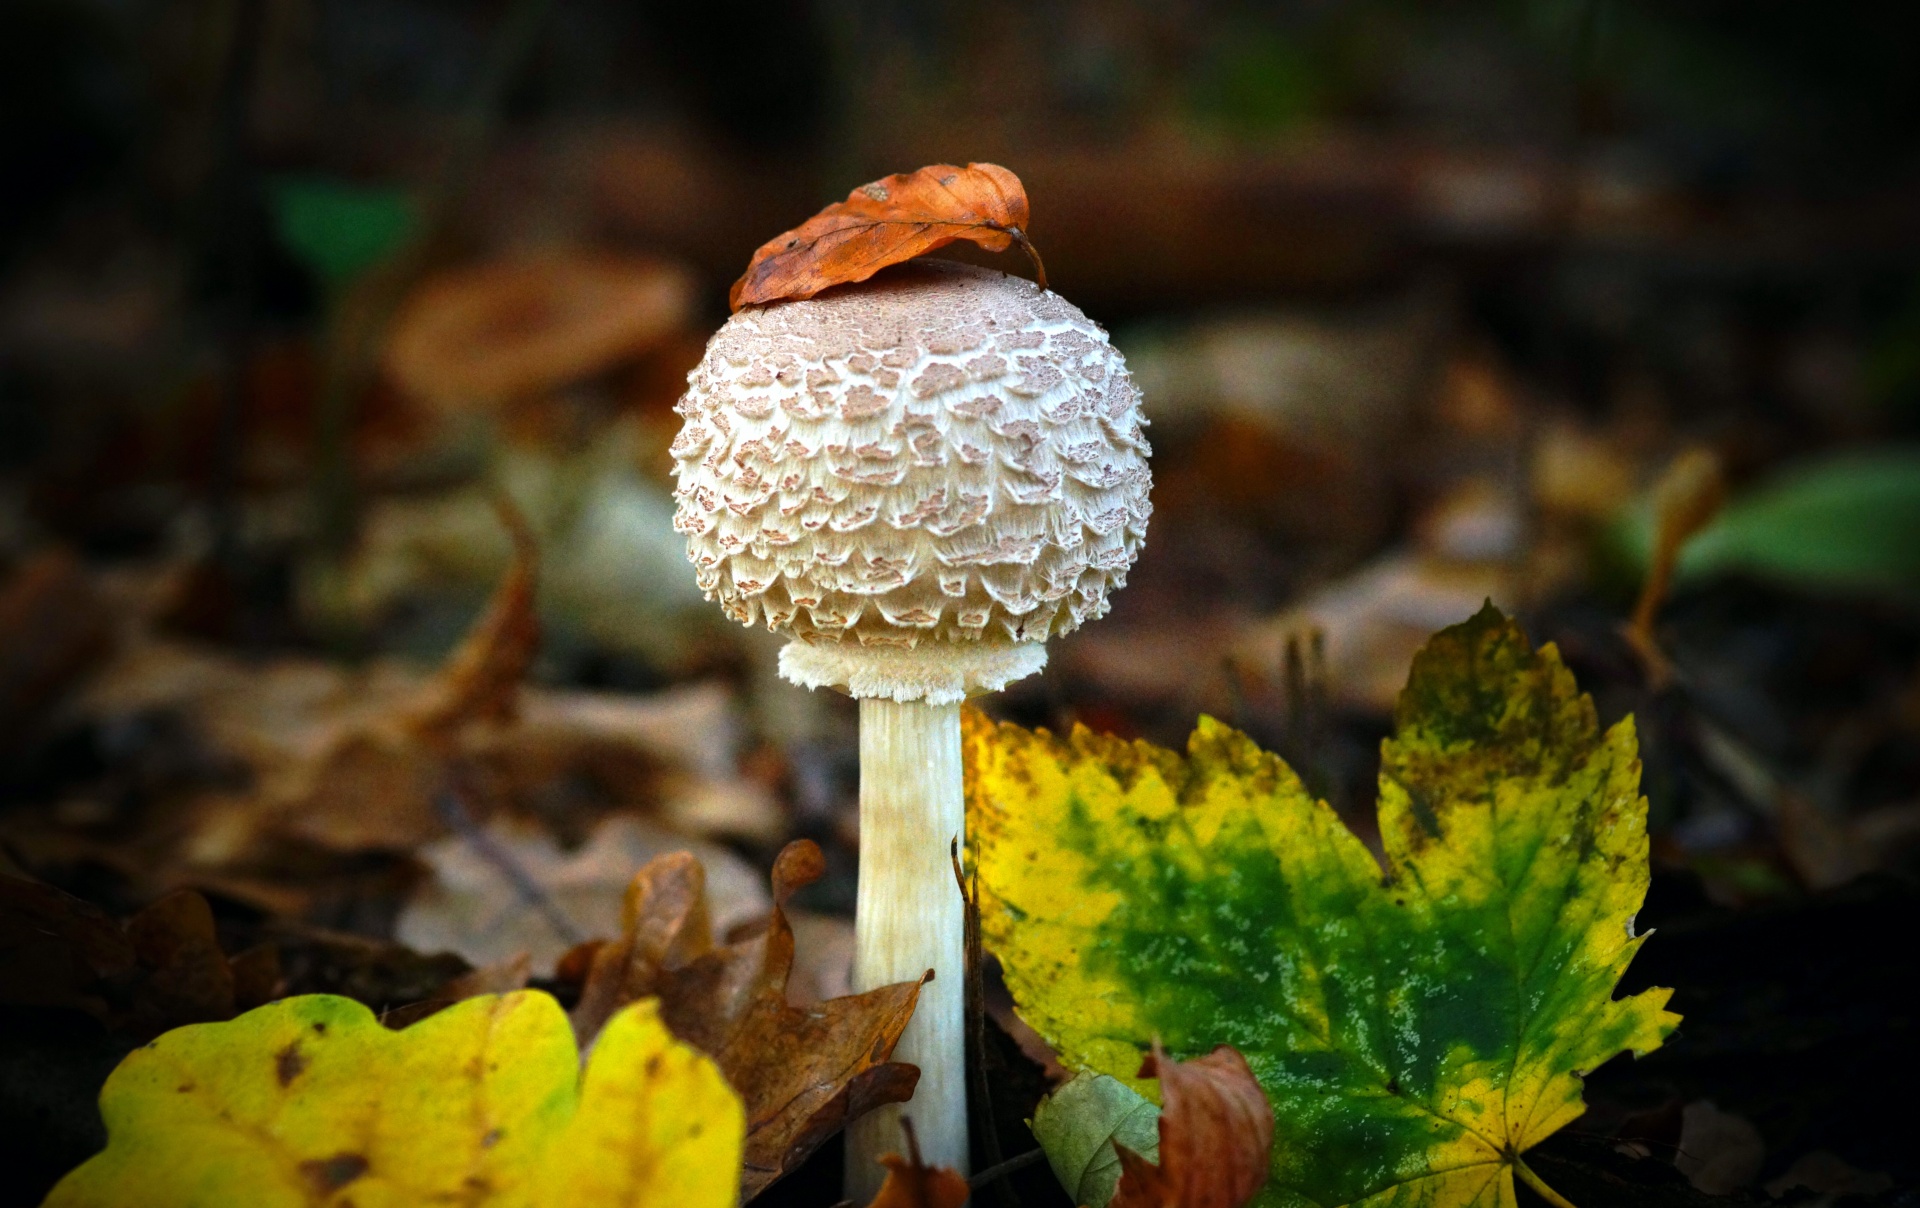 Mushroom Champion Autumn Leaves Fall Nature Macro Photography Close Up Details